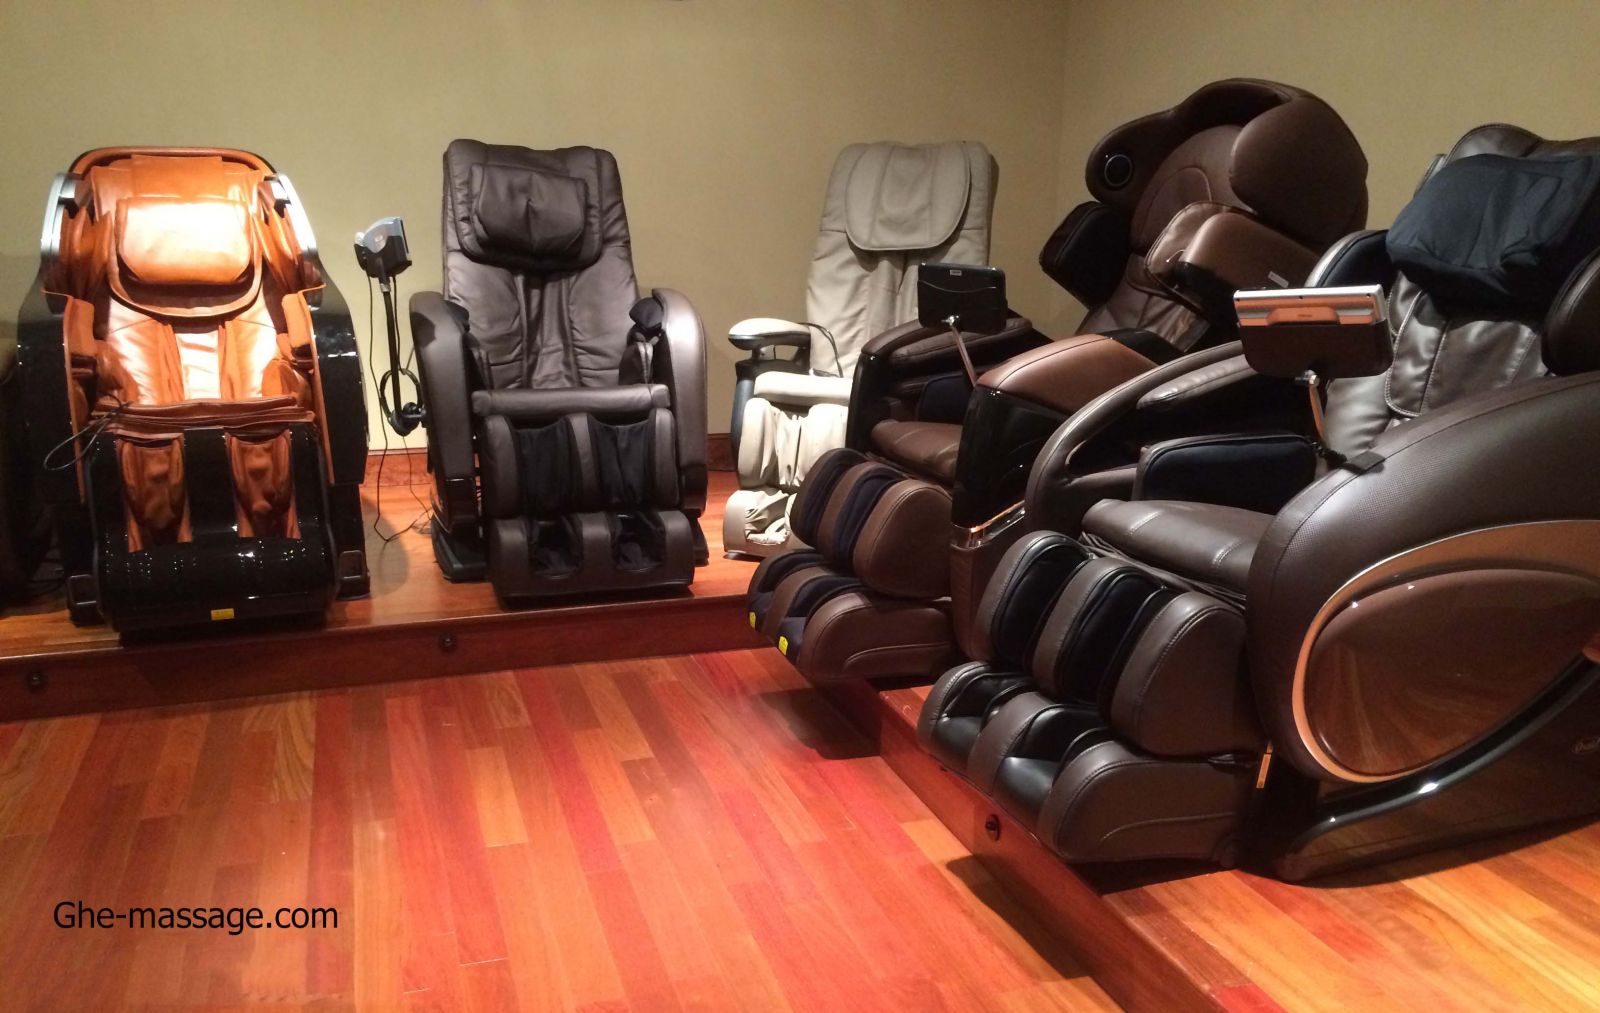 showroom ghe massage